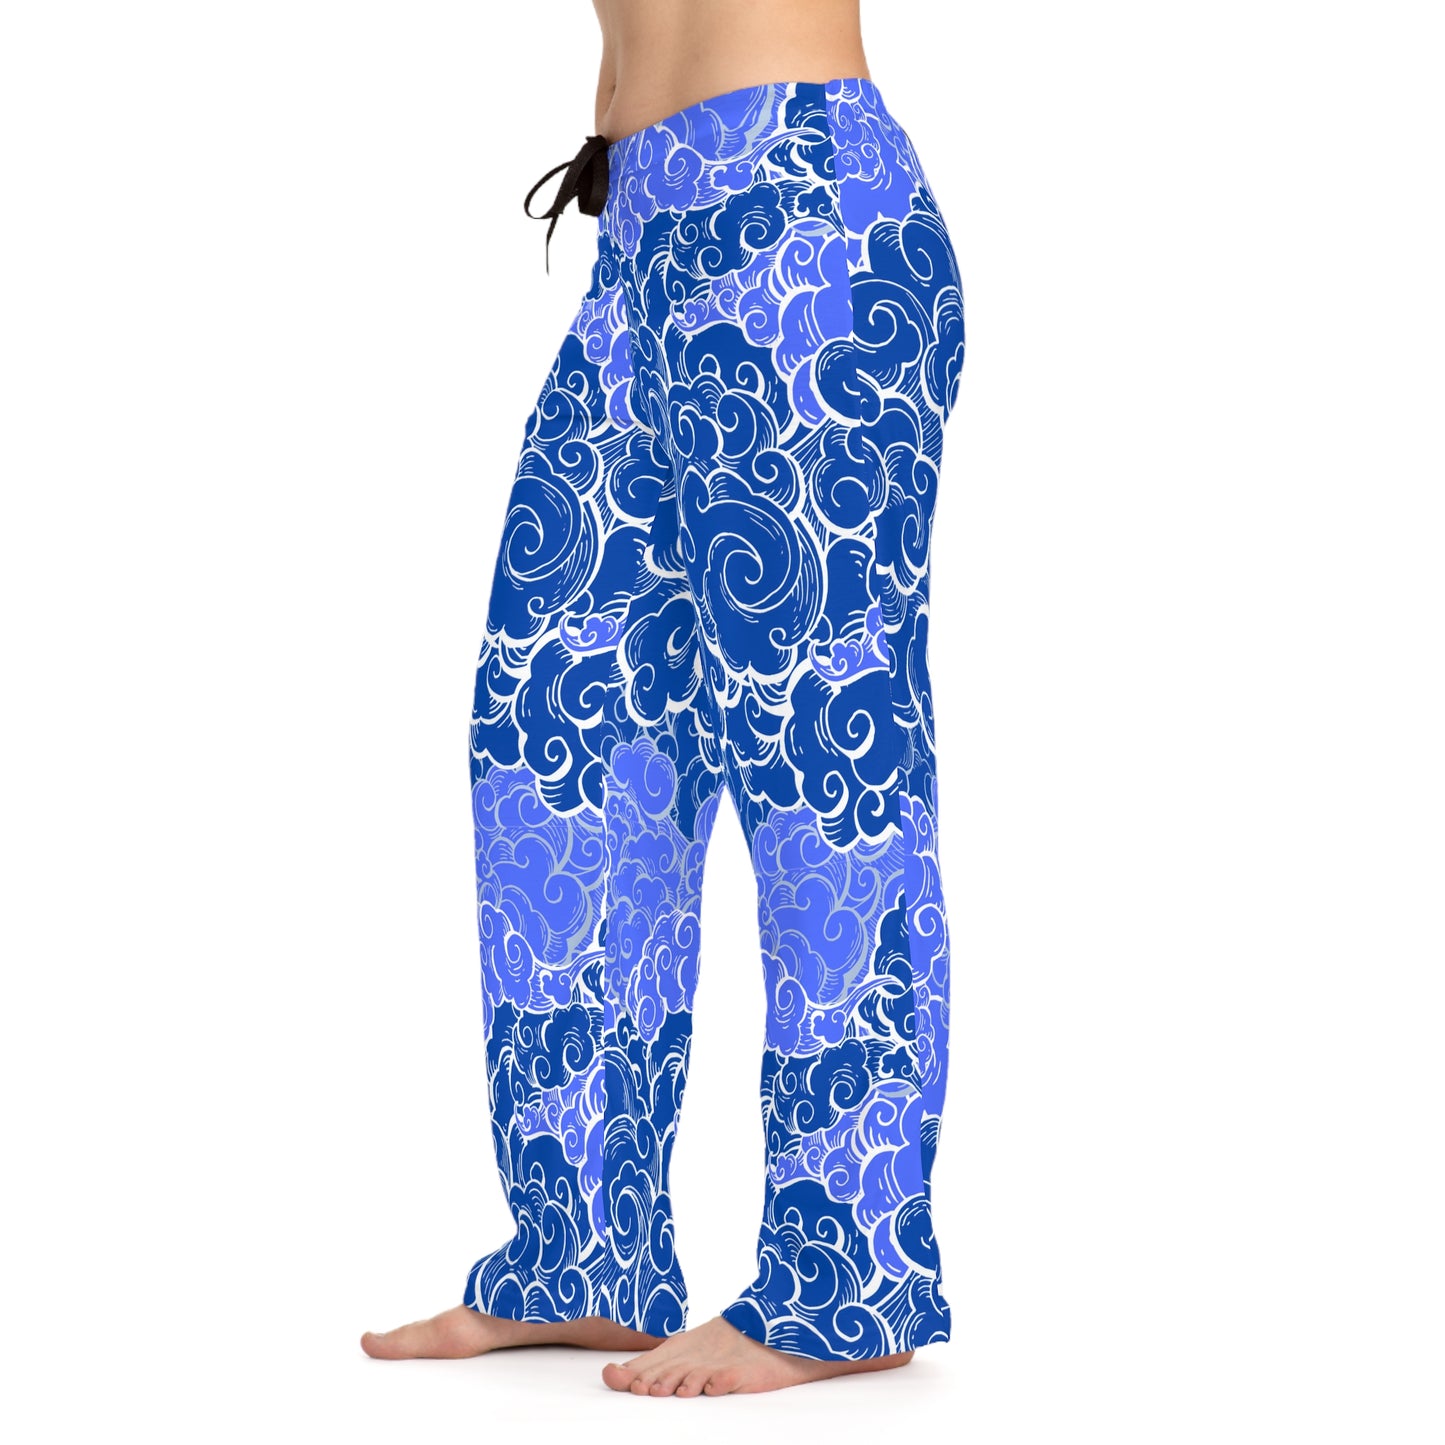 Limited Edition "Wabi-Sabi" Pajama Pants